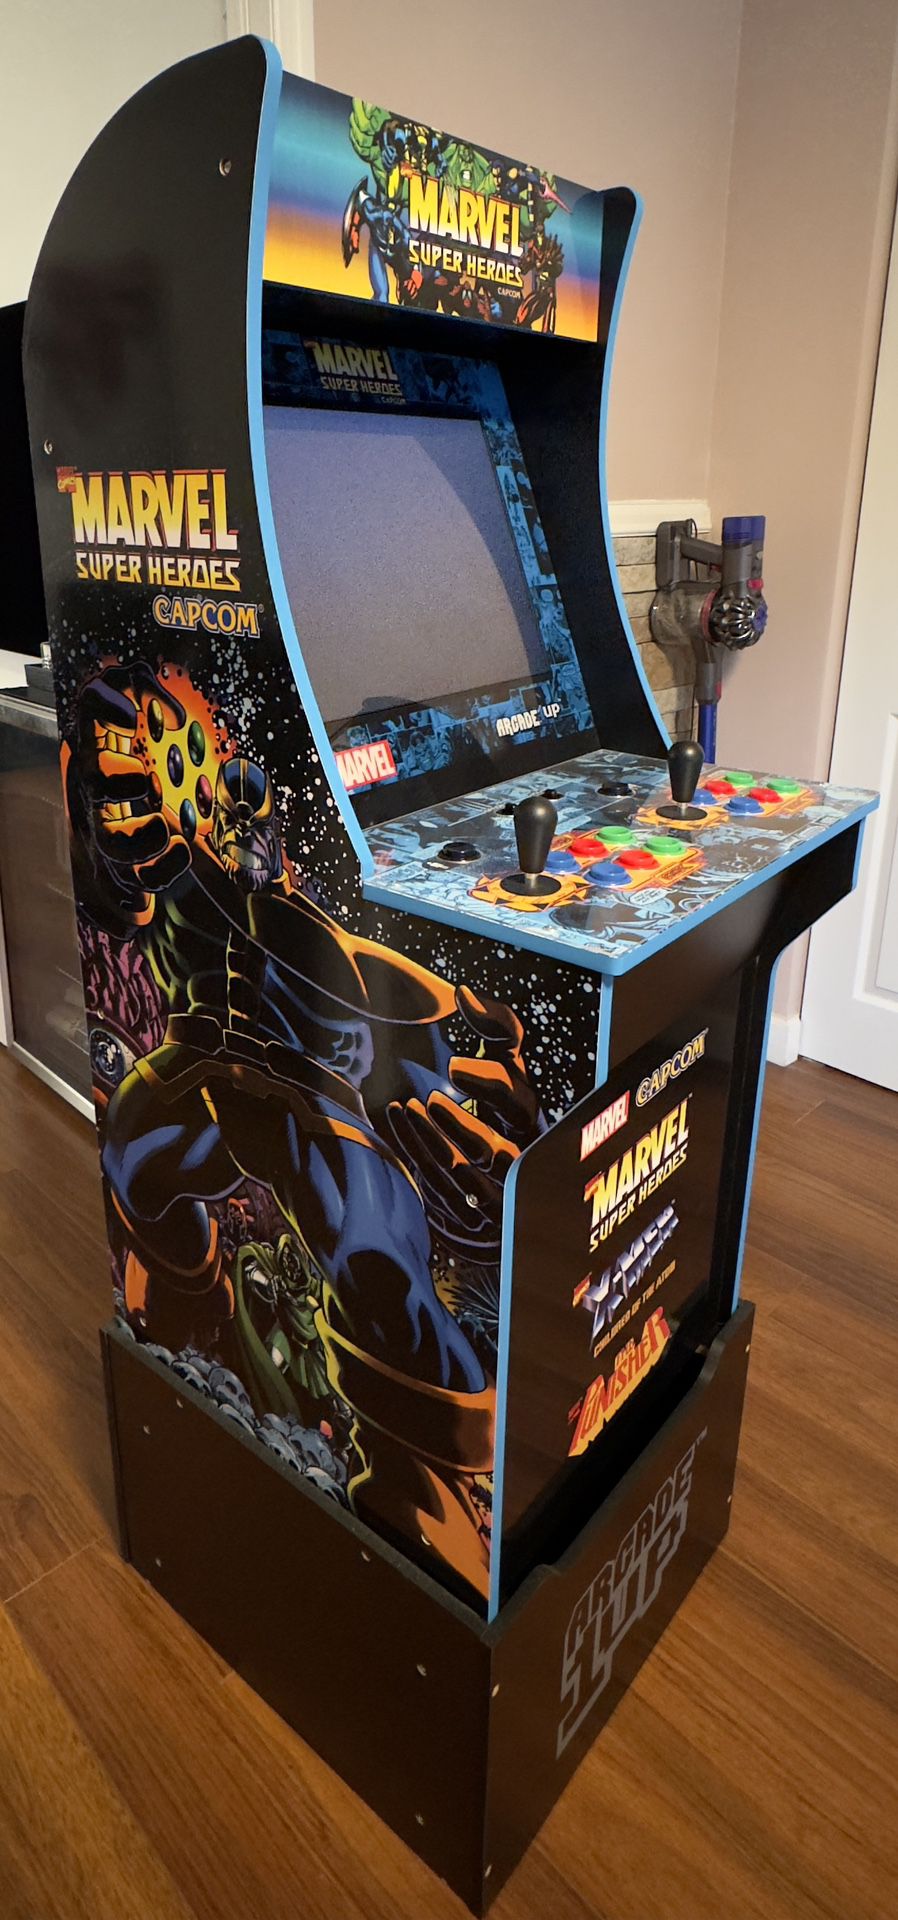 Arcade 1UP Marvel Super Heroes w/ riser